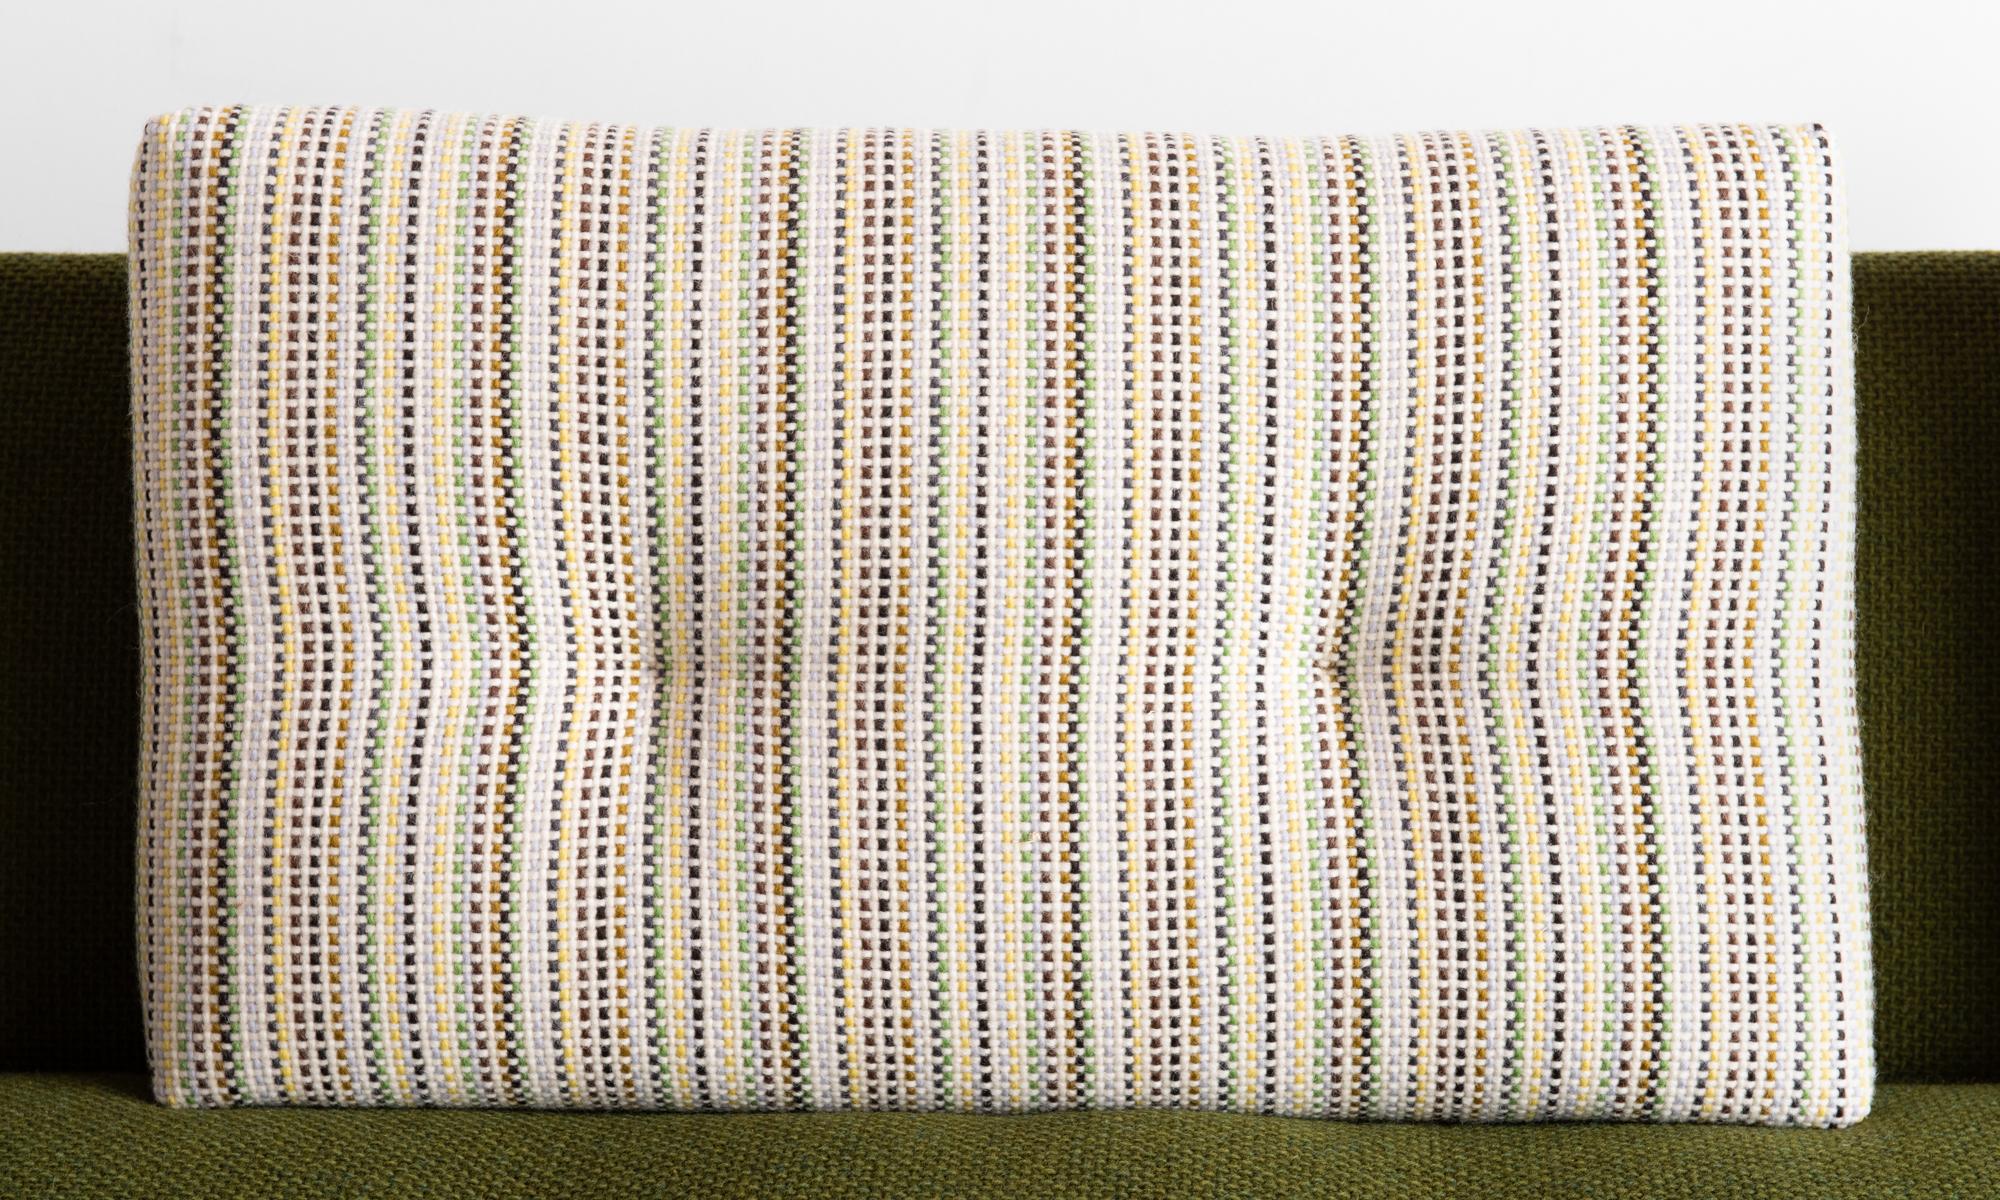 Wool Adrian Pearsall Gondola Sofa, circa 1960